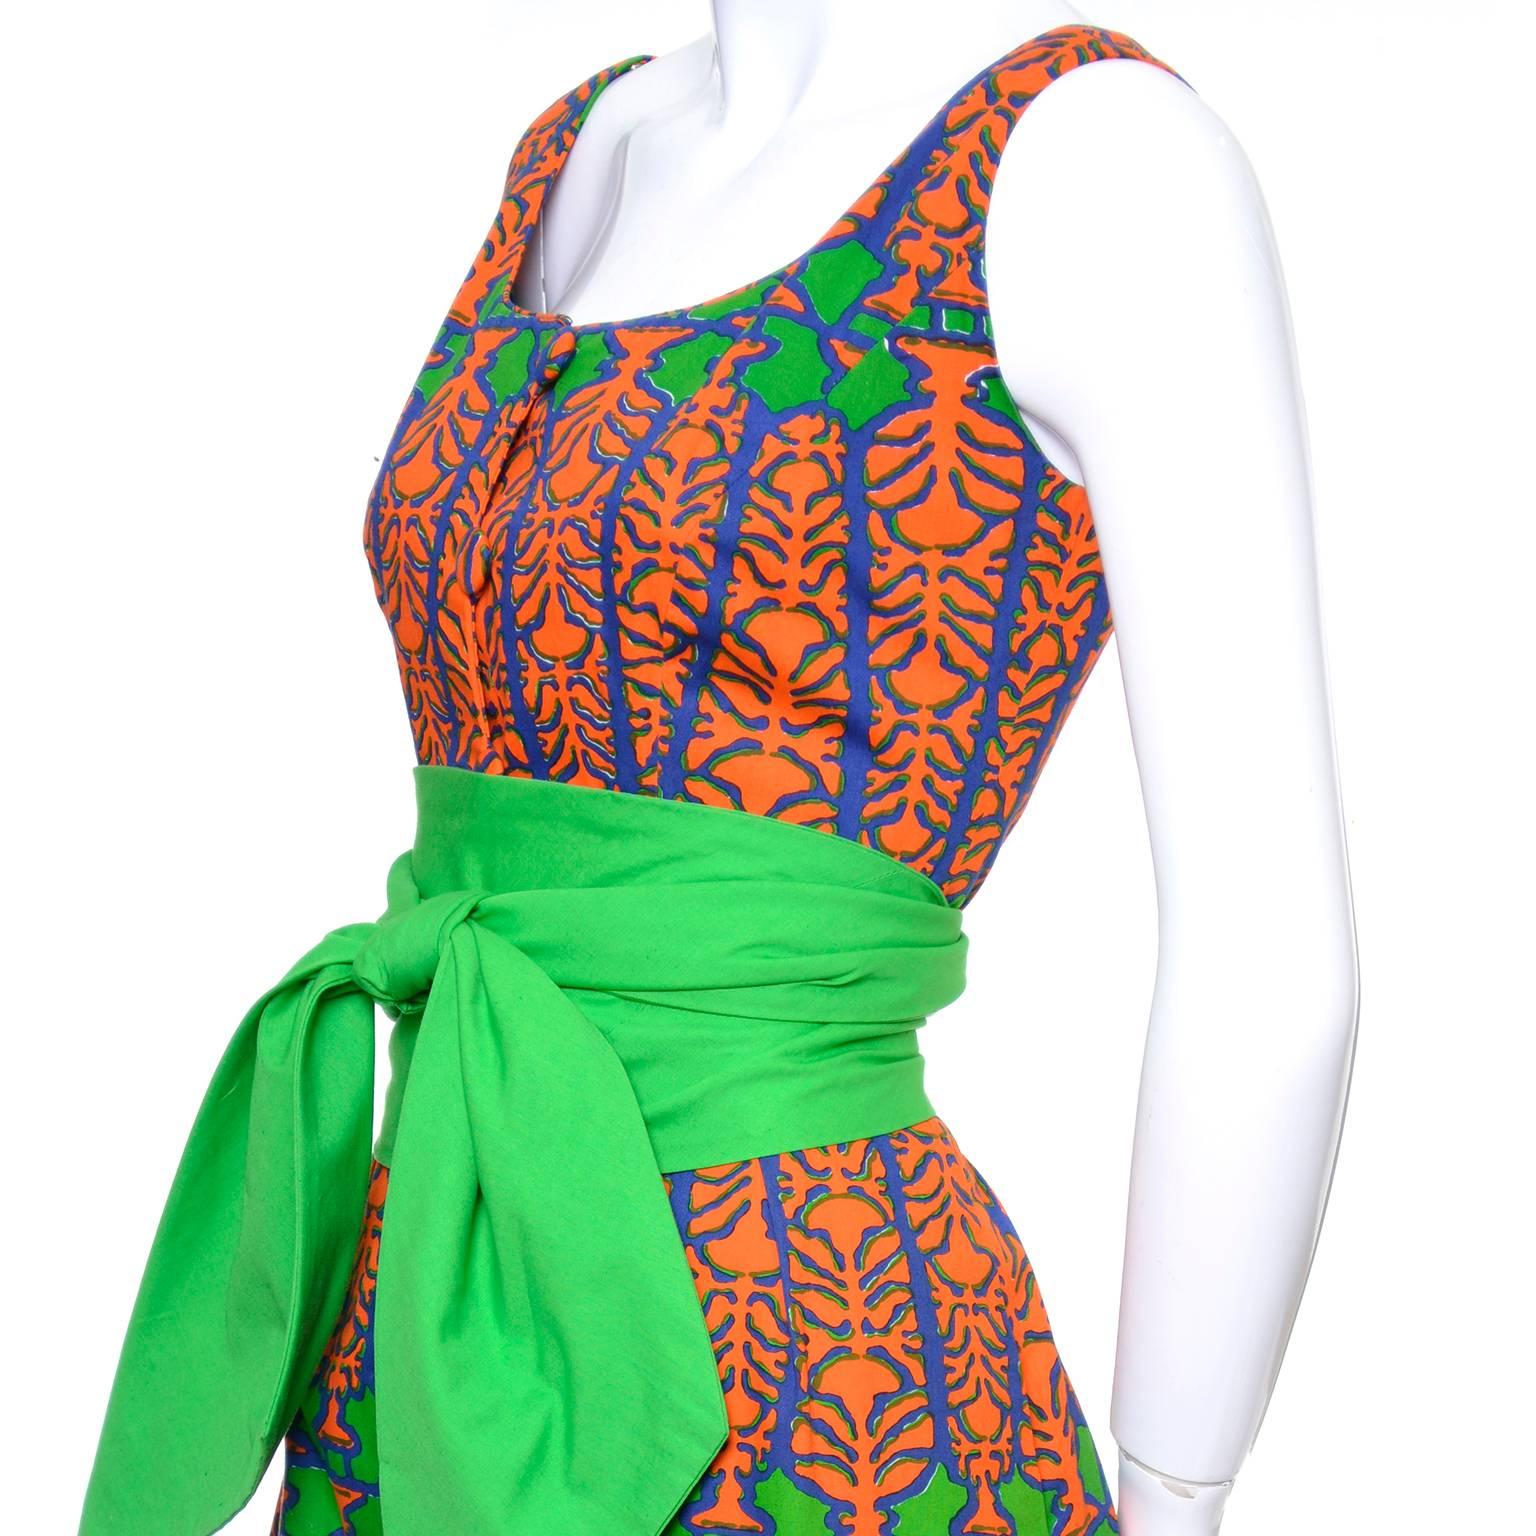 Brown Design Thai Vintage Dress in Blue Green & Orange Cotton Tropical Print Size 6/8